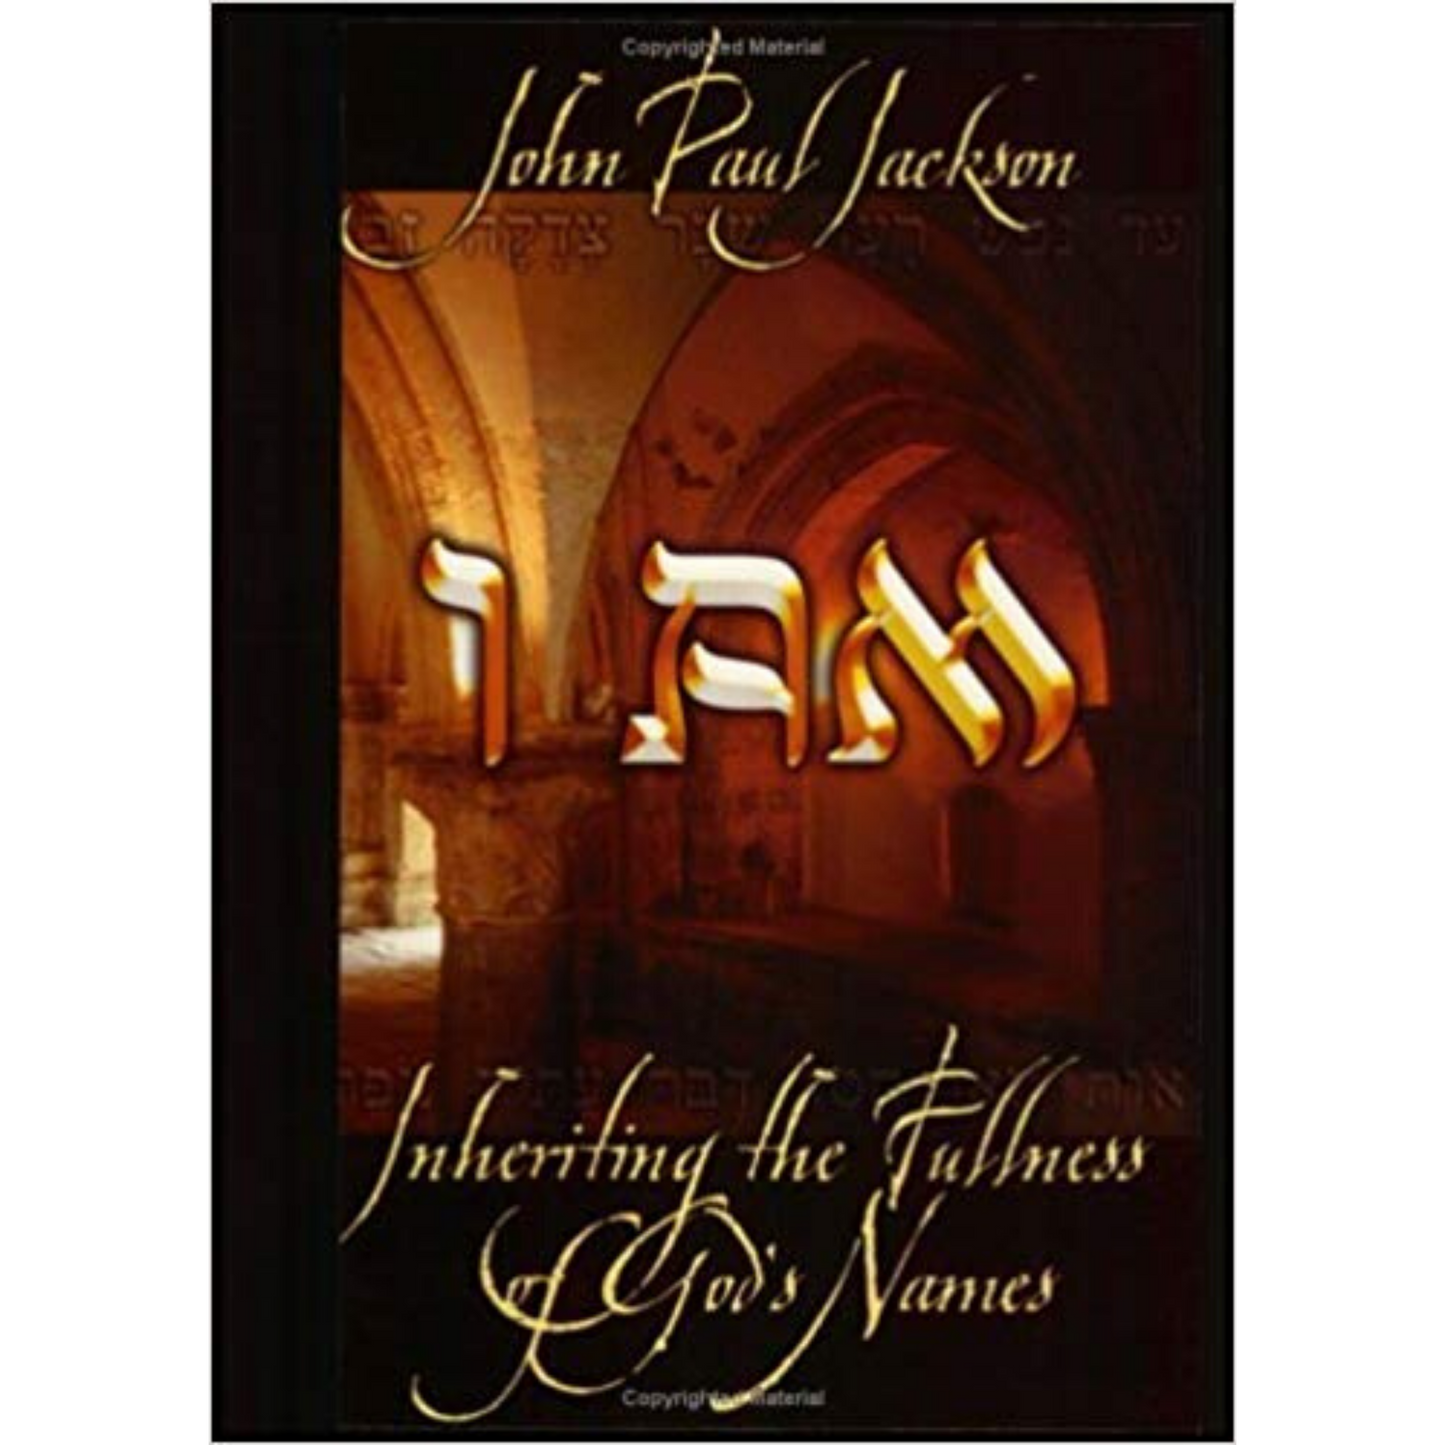 I Am: Inheriting The Fullness Of God’s Names